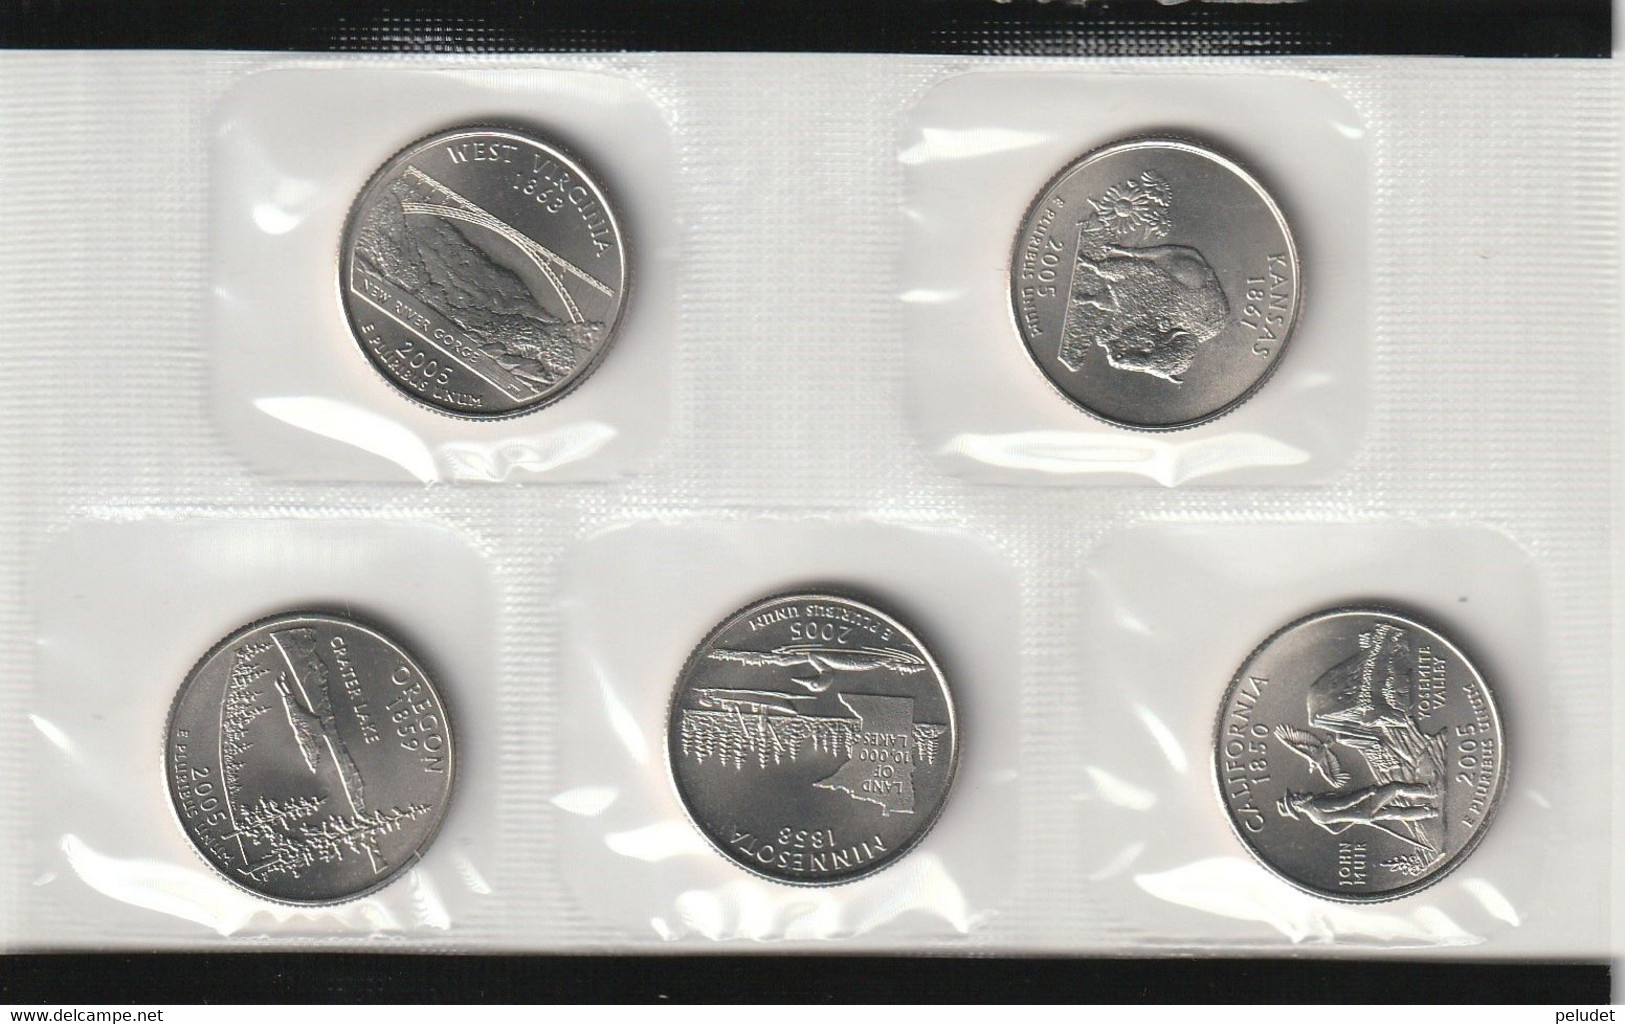 United States min uncirculated coin set - 2005 - Denver / Philadelphia